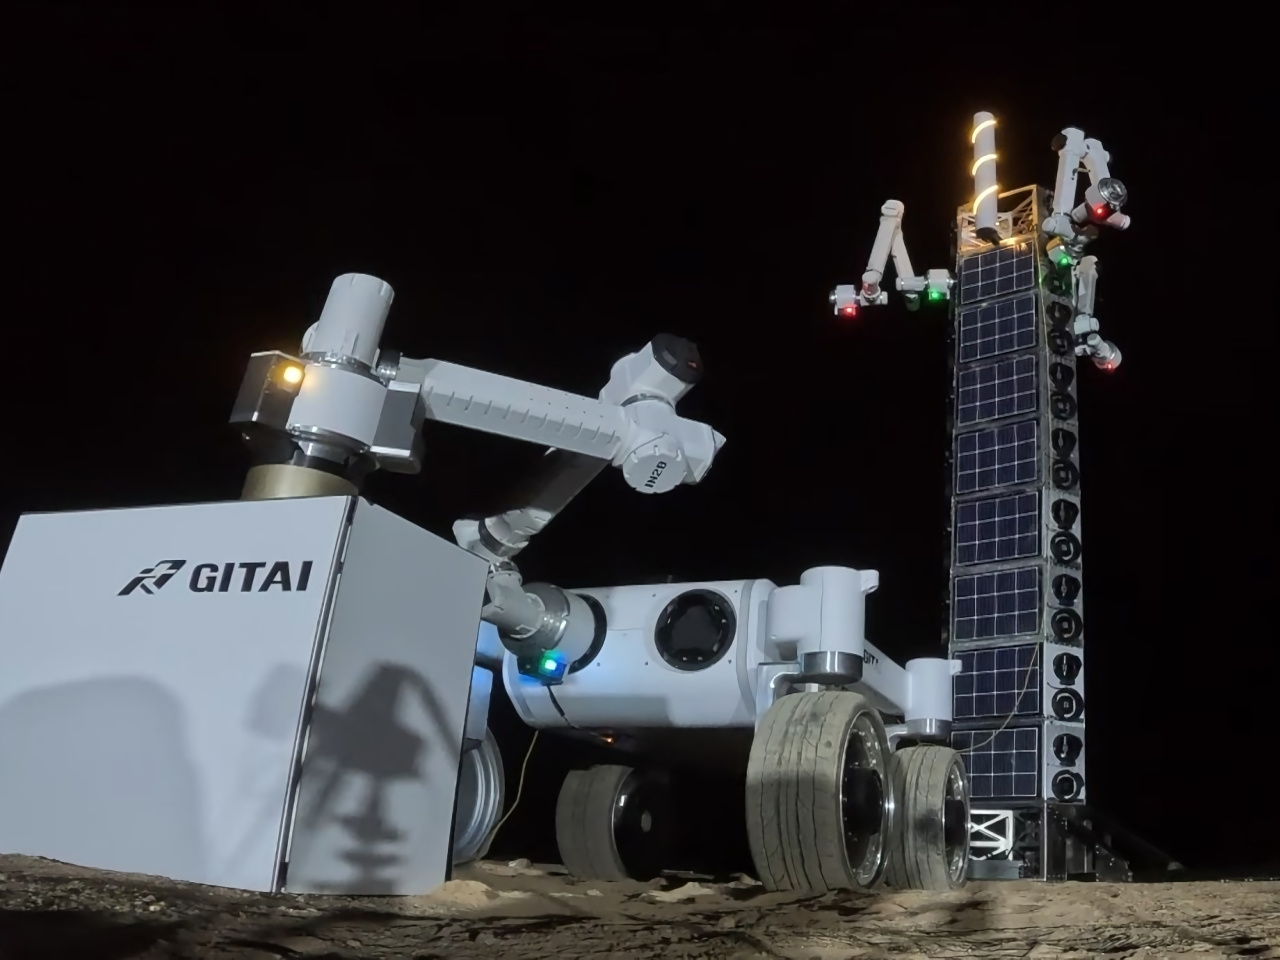 KDDIとGITAI、ロボットで基地局アンテナ設置に成功--月での通信環境構築を想定